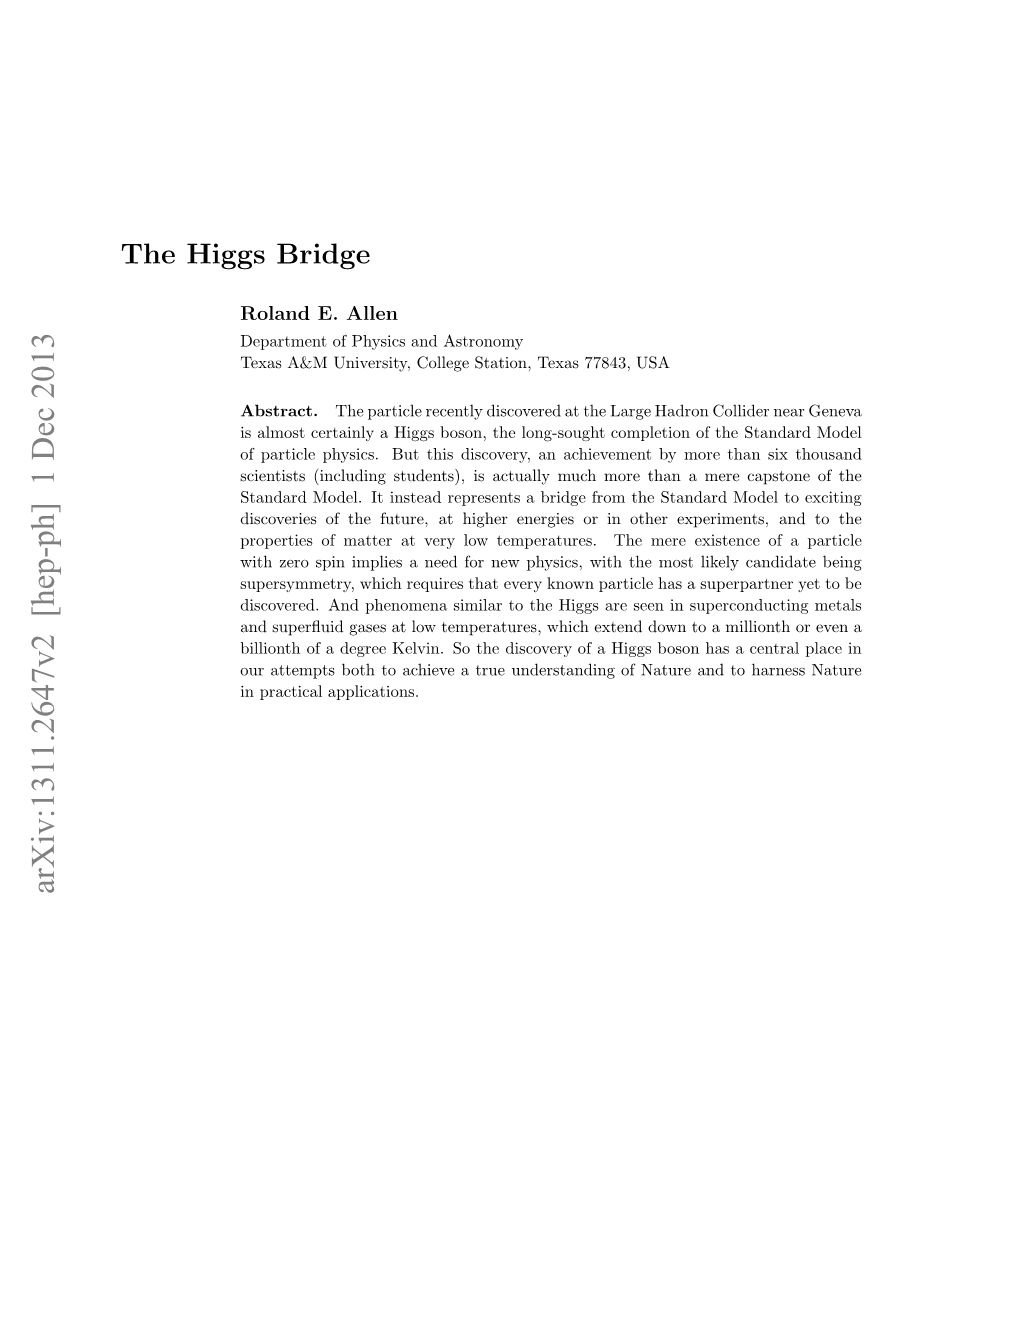 The Higgs Bridge 2